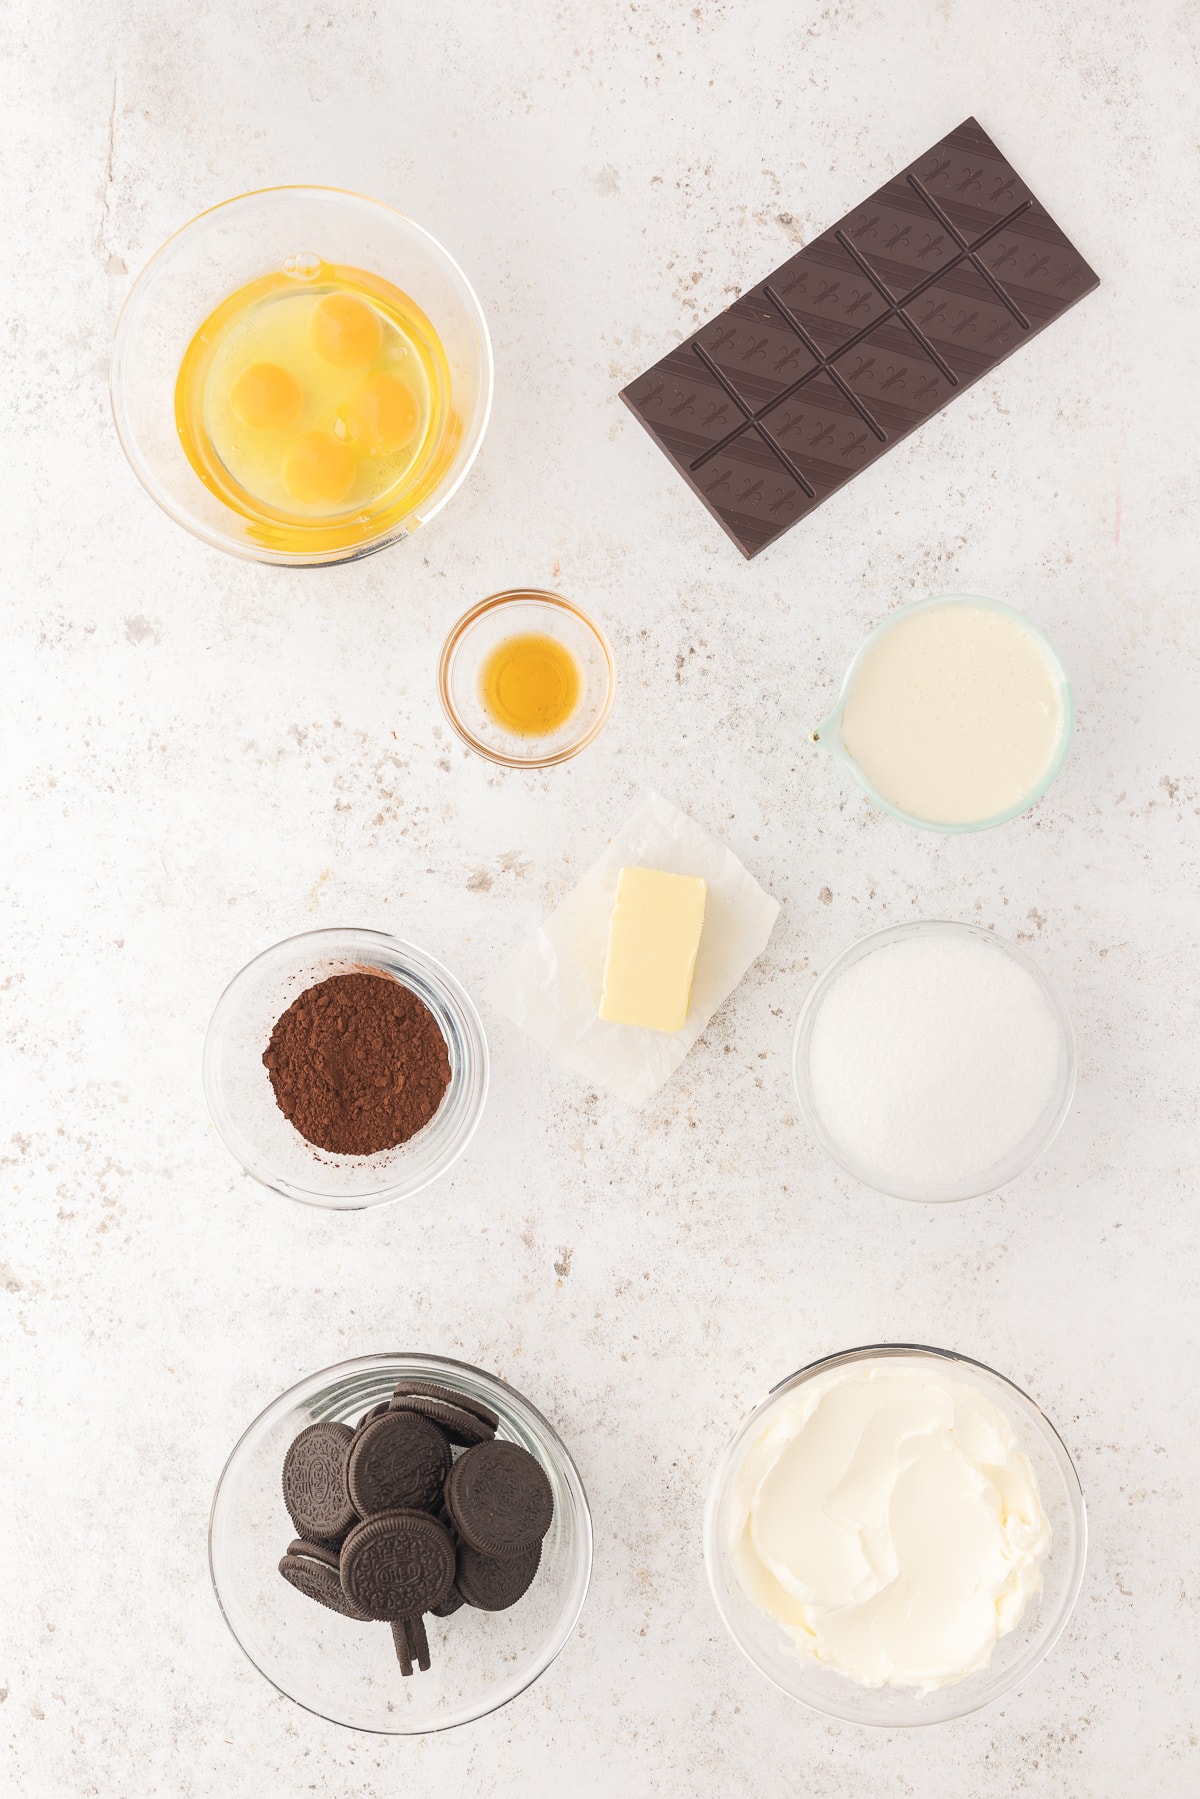 ingredients displayed for making chocolate cheesecake bars